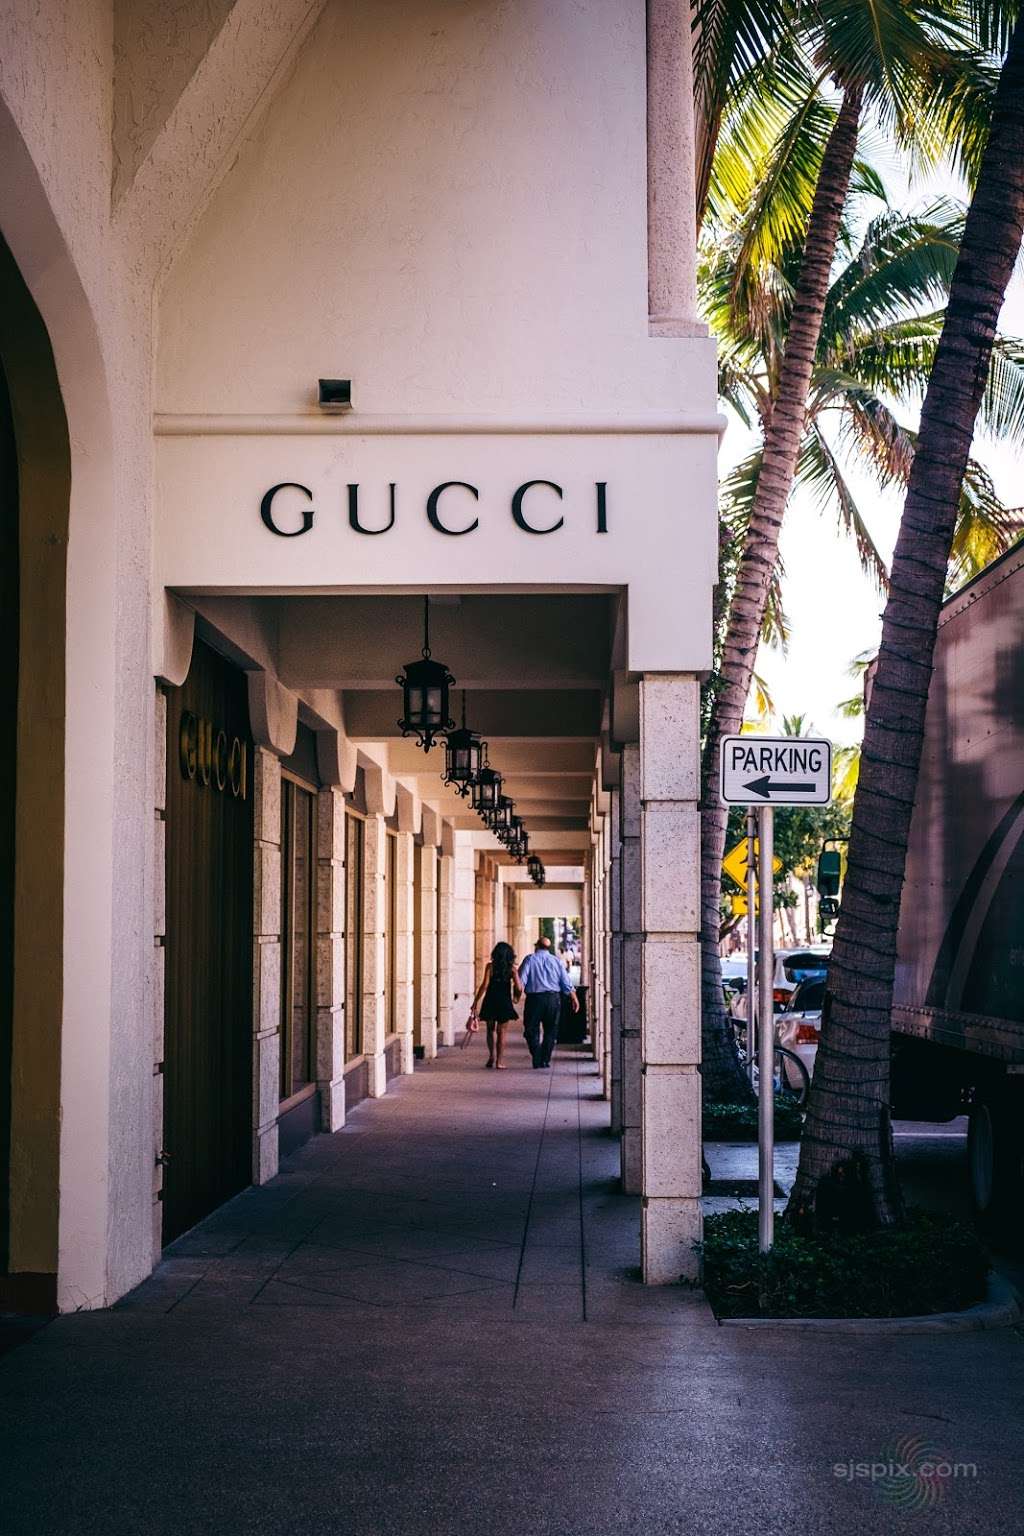 Gucci - 150 Worth Ave Space 137, Palm Beach, FL 33480